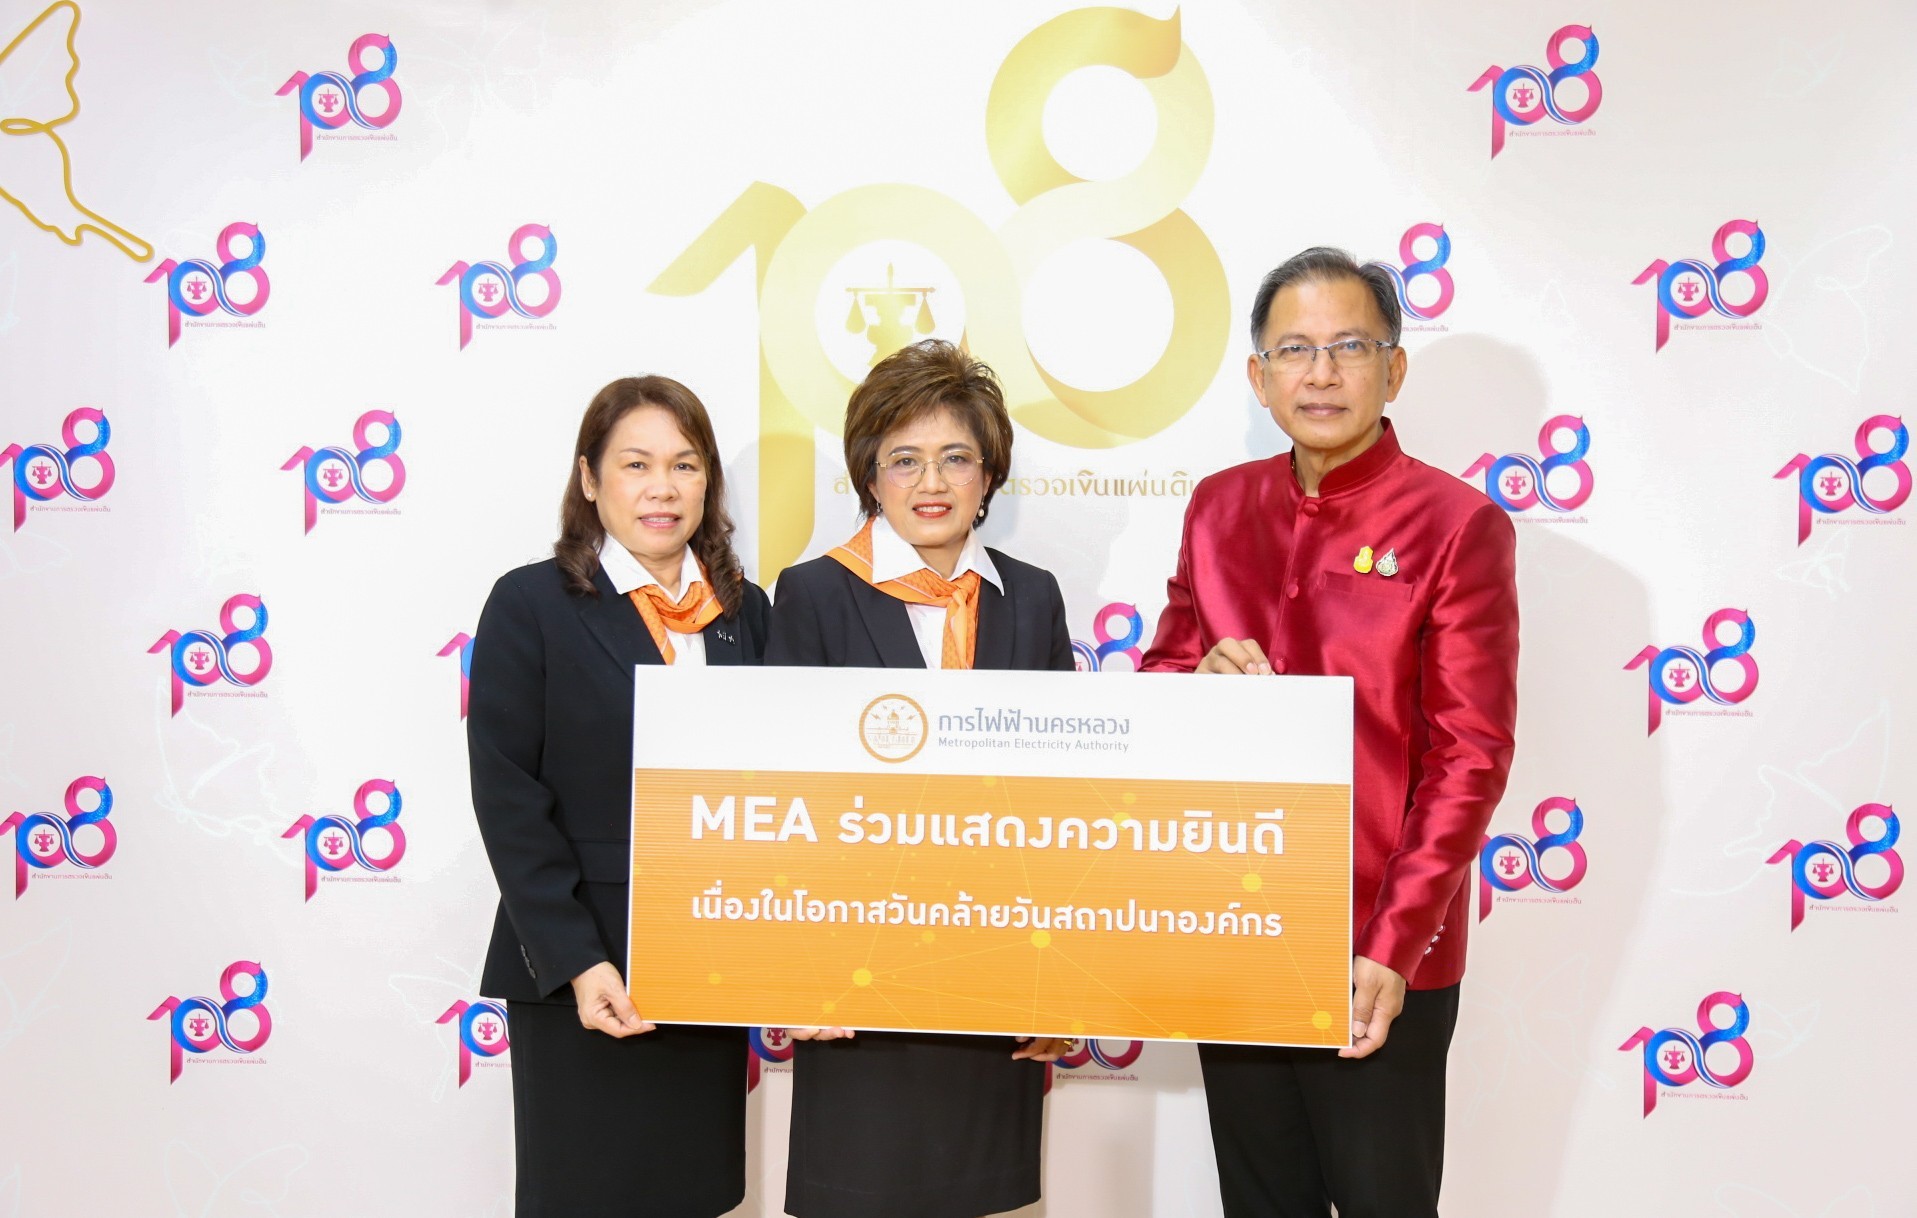 MEA ร่วมแสดงความยินดี เนื่องในโอกาสวันคล้ายวันสถาปนาสำนักงานการตรวจเงินแผ่นดิน ครบรอบ 108 ปี